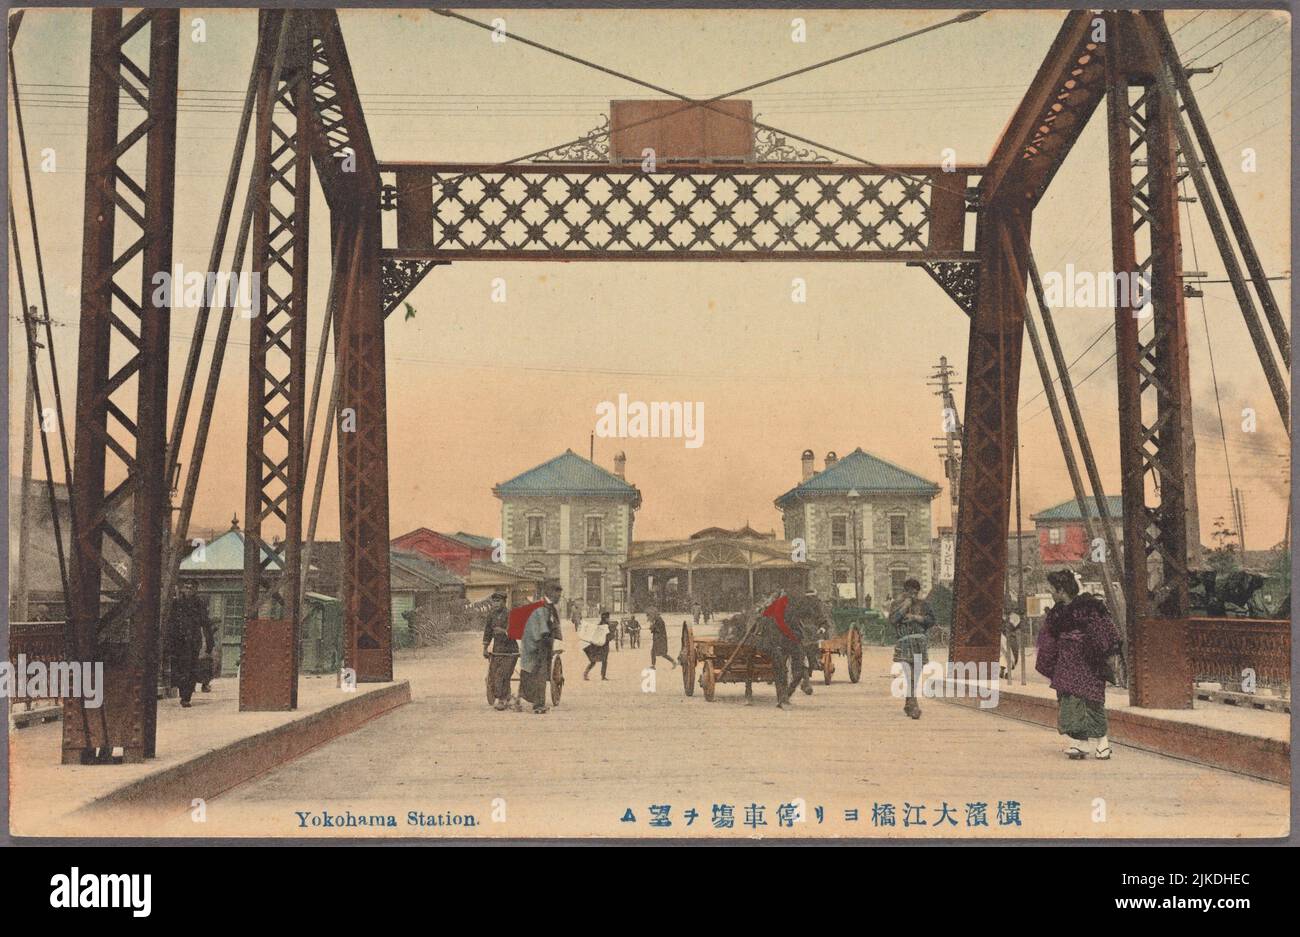 Bahnhof Yokohama. Pacific Pursuits : Postkarten Japan - Yokohama. Erscheinungsdatum: 1907 - 1918 Ort: Made in Japan Verlag: s.n. Yokohama-shi (Japan) Stockfoto